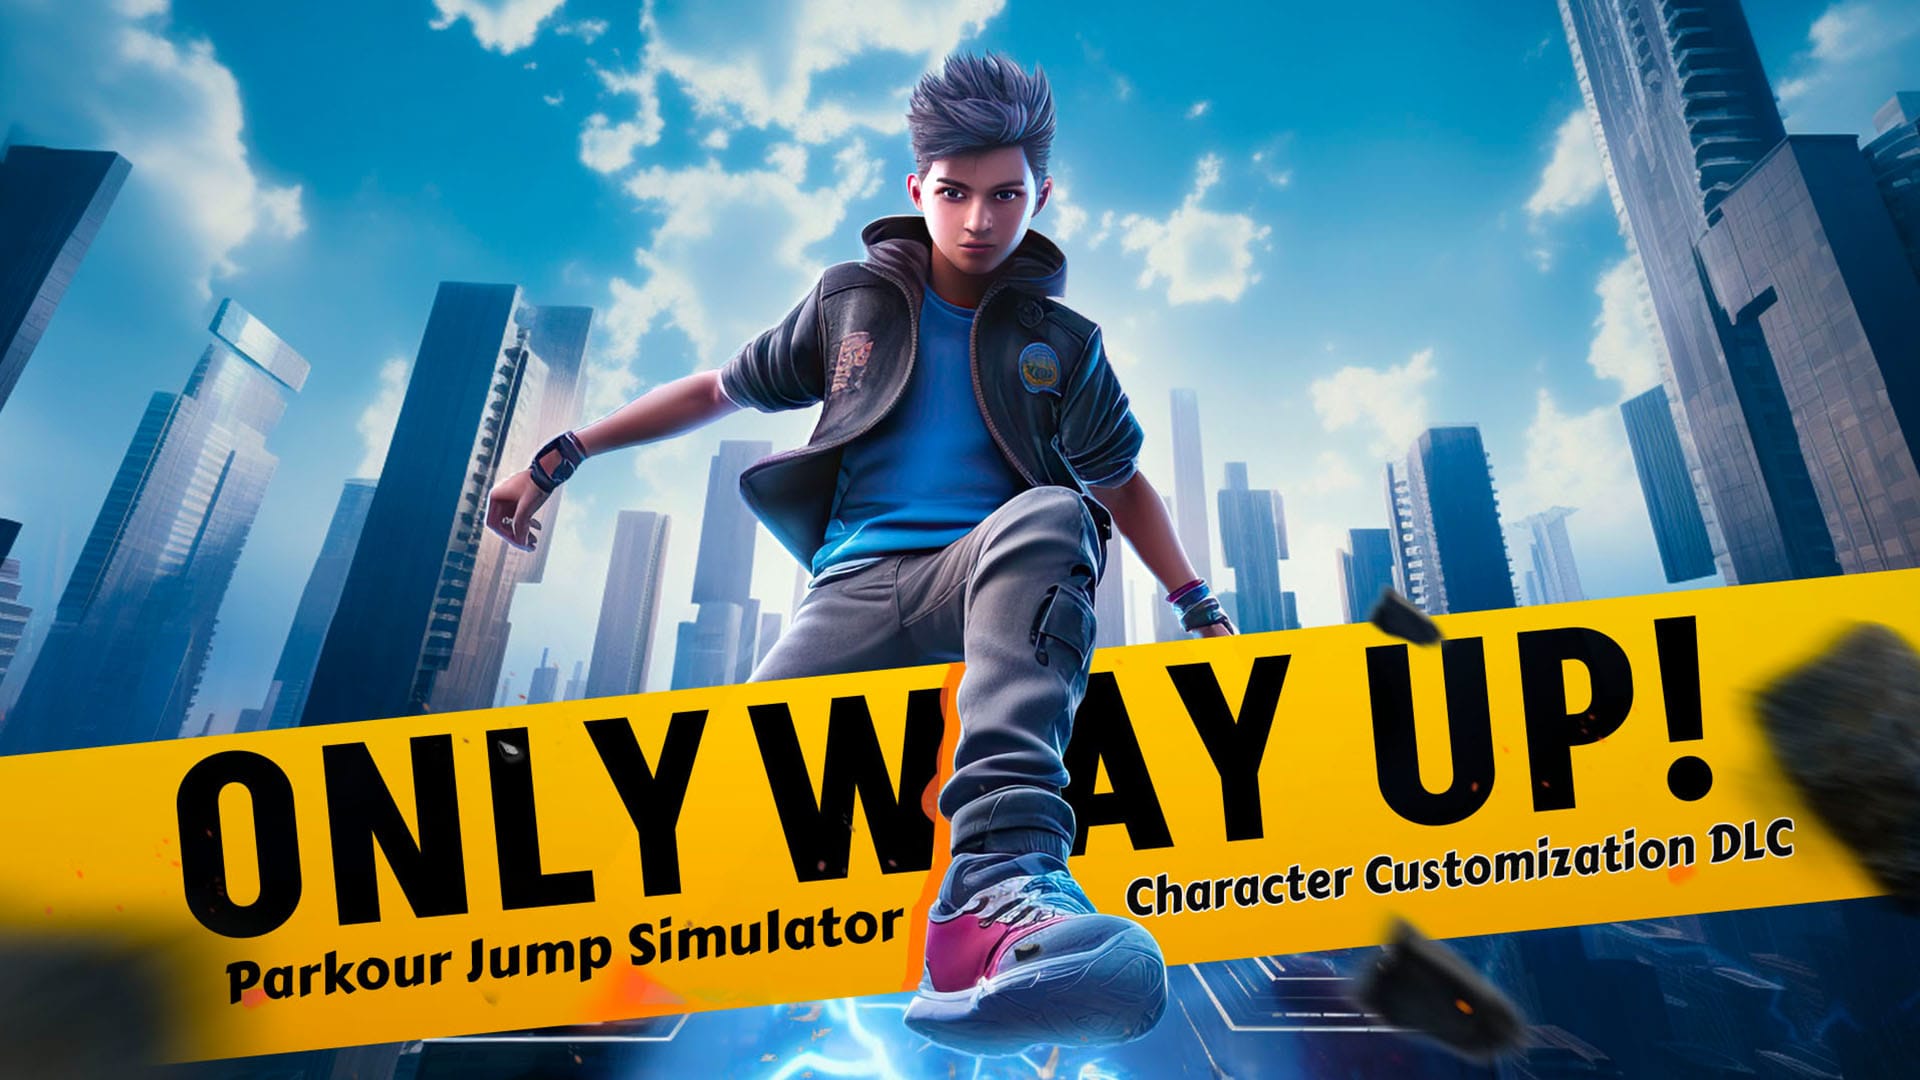 Only Way Up! Parkour Jump Simulator: Character Customization DLC